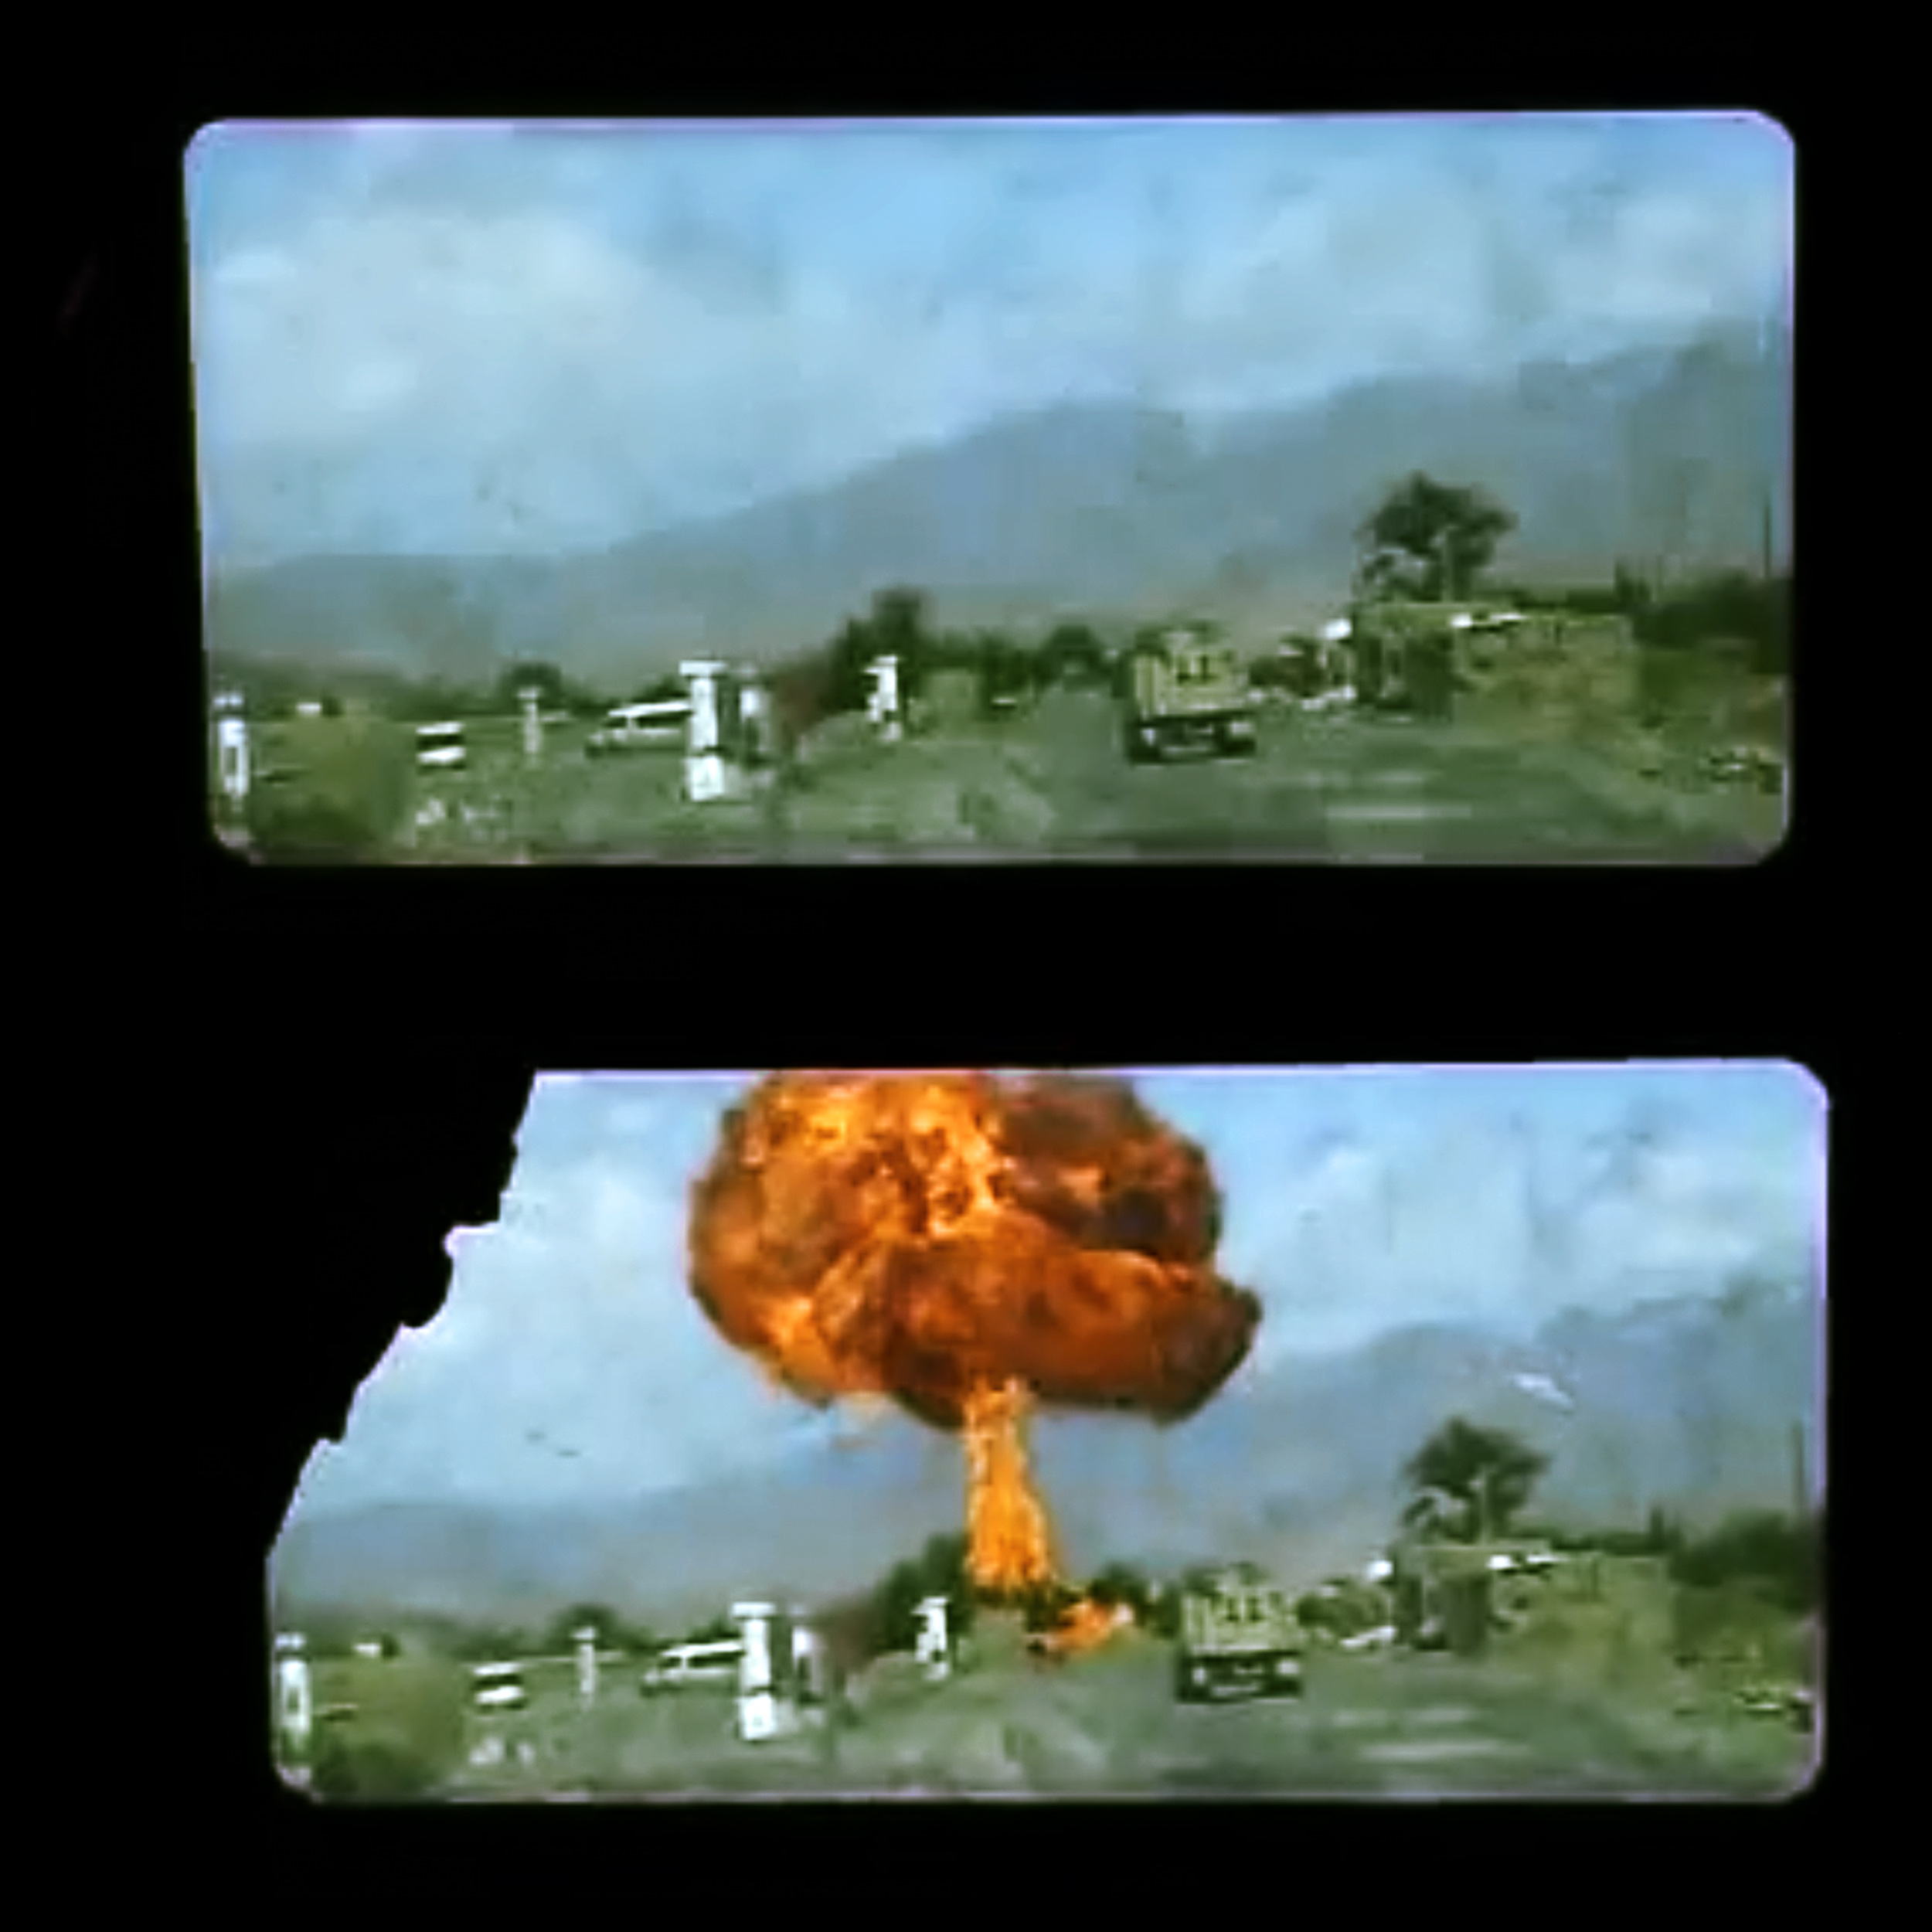  Several Buried Artillery Munitions (Delayed Detonation), 2014 